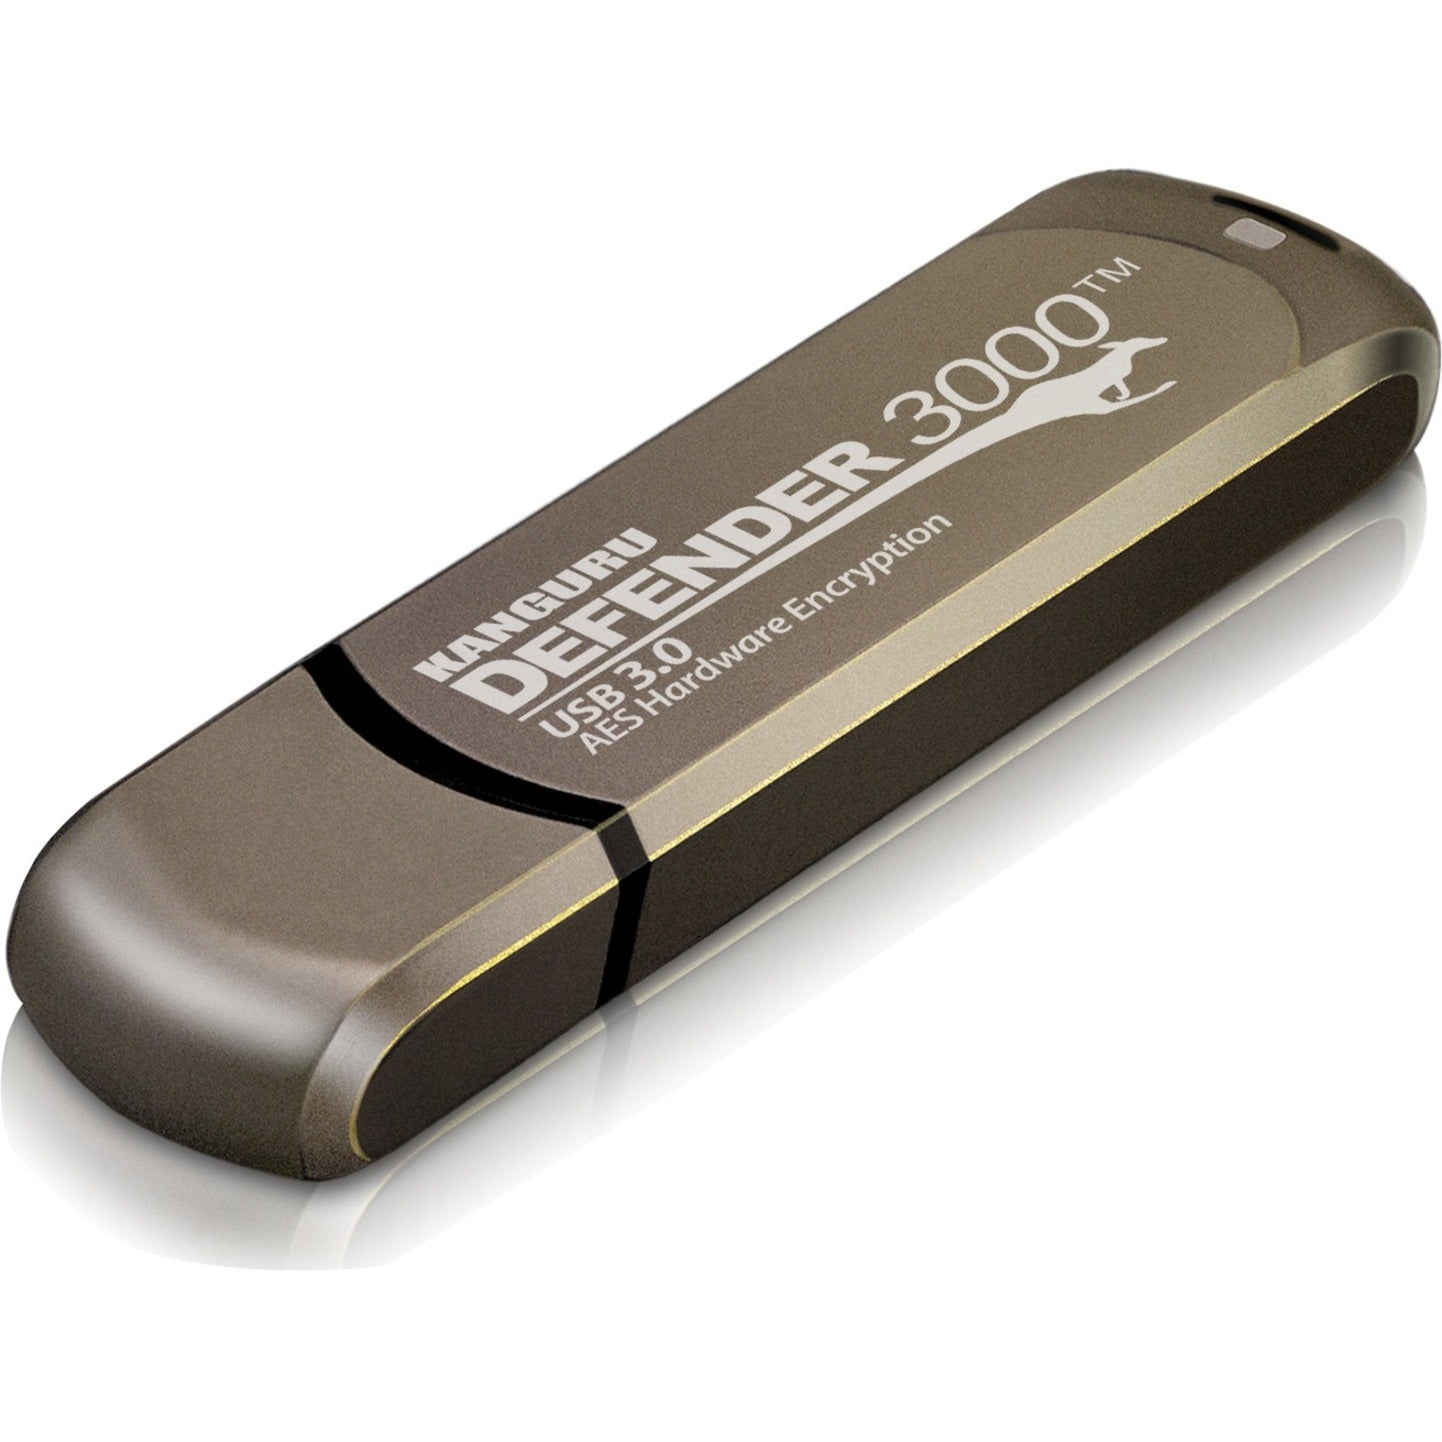 Kanguru KDF3000-64G Defender 3000 FIPS 140-2 Certified Level 3 SuperSpeed USB 3.0 Flash Drive, 64GB